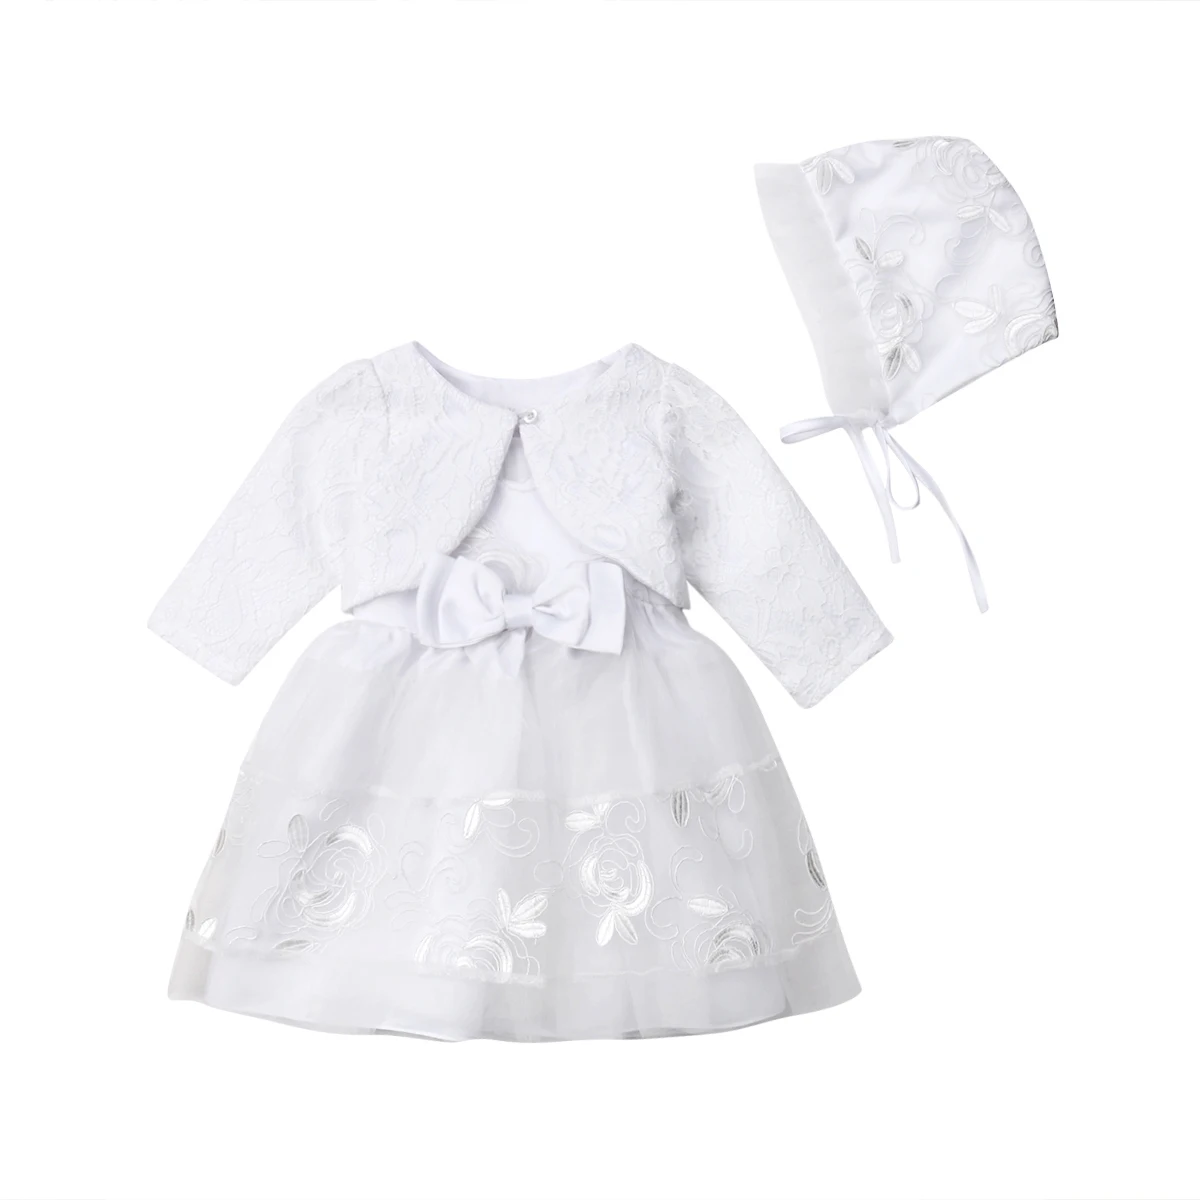 2020 Baby Girls Ivory Lace 3Pcs Clothes Set Fashion Babies Casual Party Christening Dress Bonnet Jacket 0-18M ropa de bebe niña